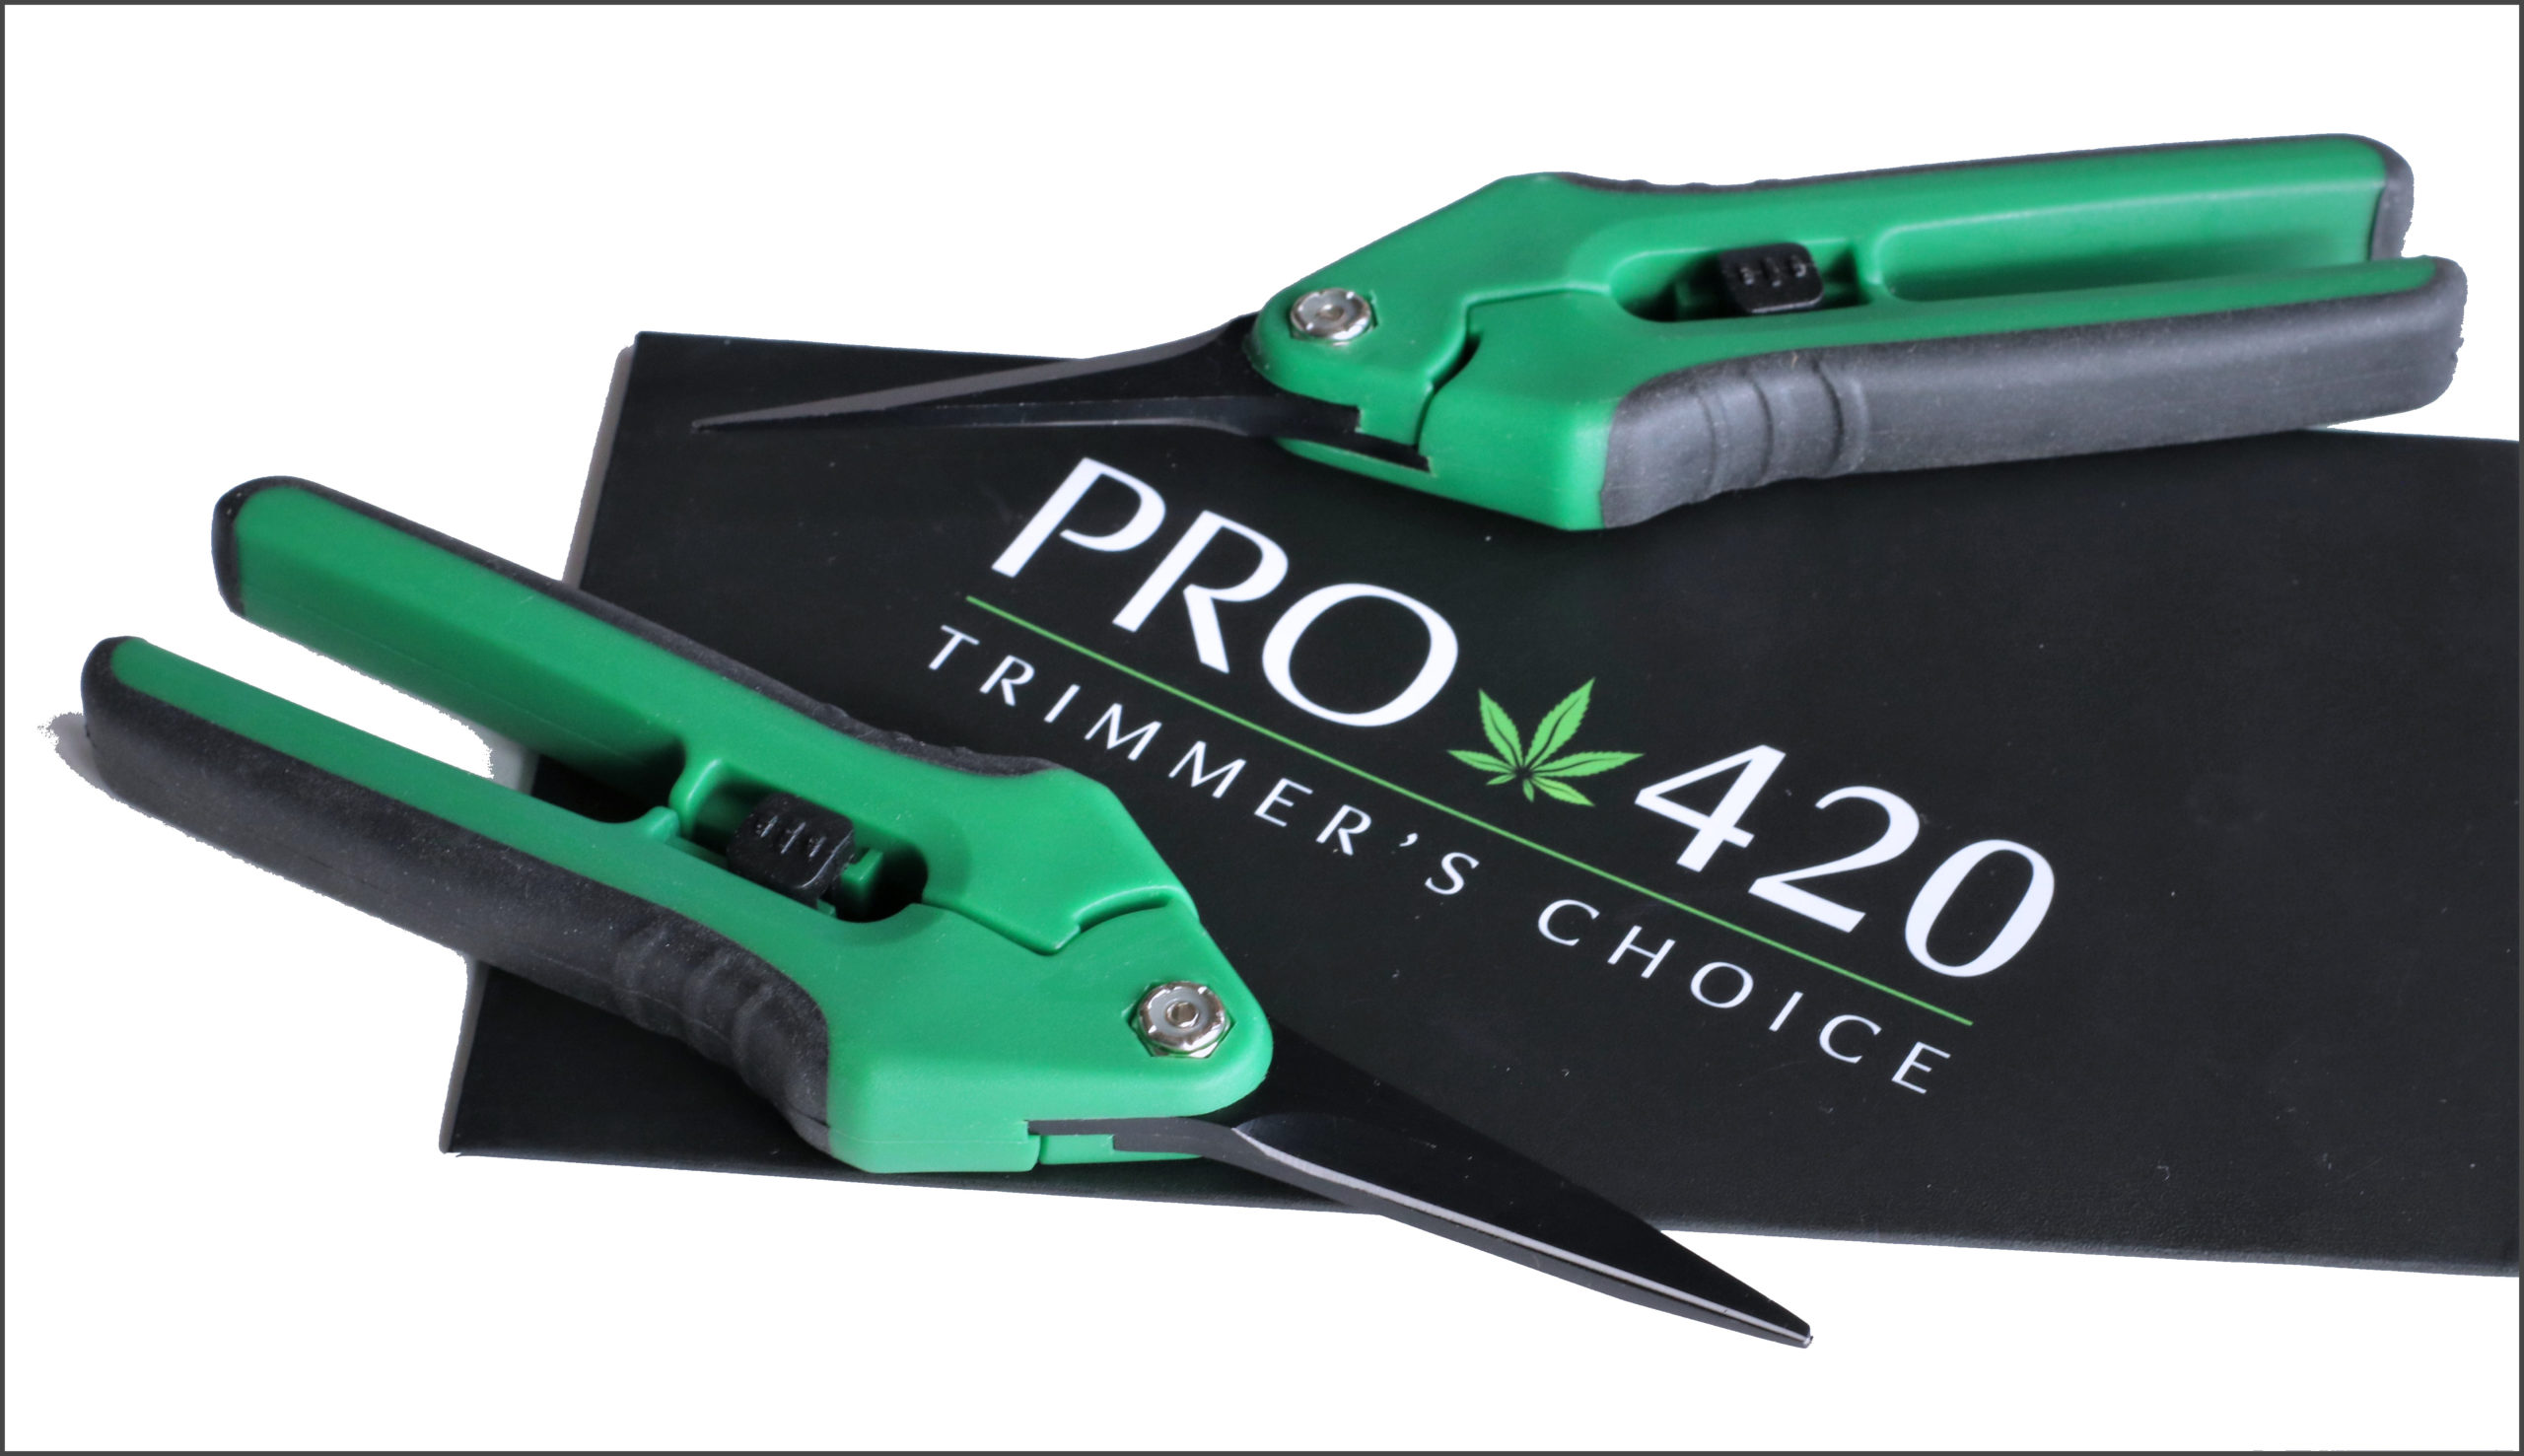  PRO 420 Trim Kit (Spring Loaded Scissors, Bonsai Scissors,  Cleaning Solution) Bud Trimming : Patio, Lawn & Garden